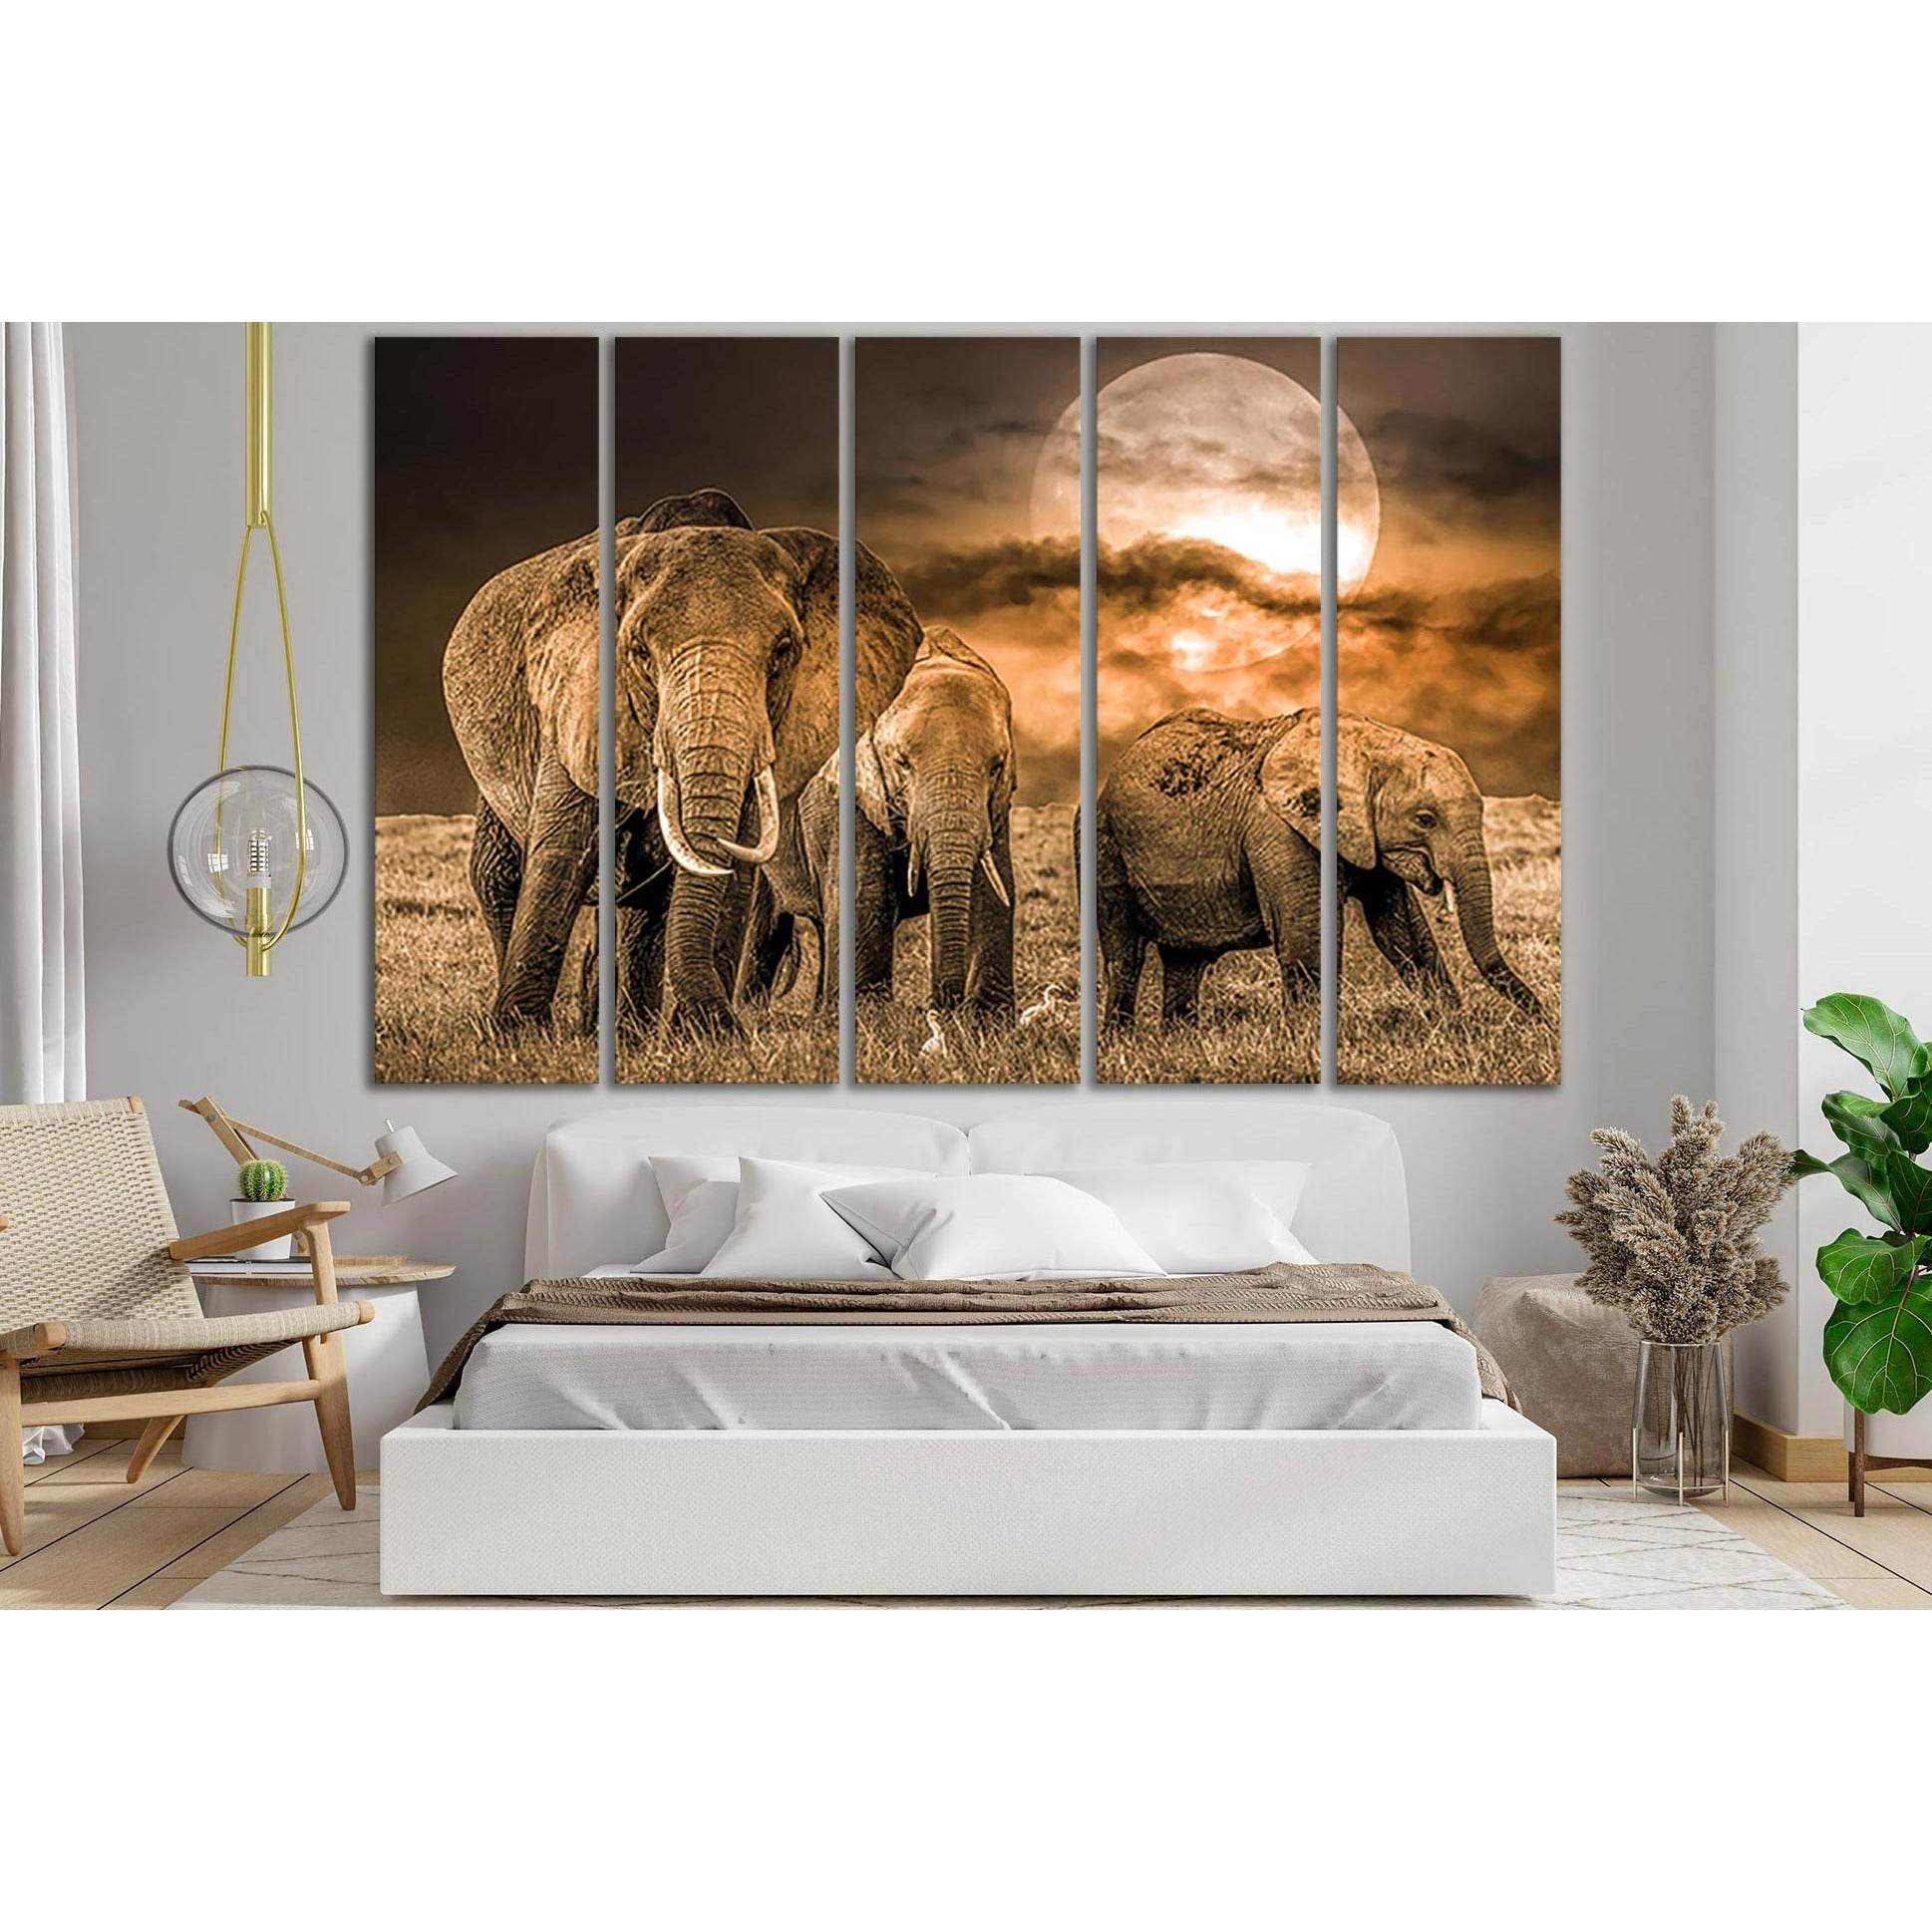 Savannah And Three Elephants №SL1553 Ready to Hang Canvas Print